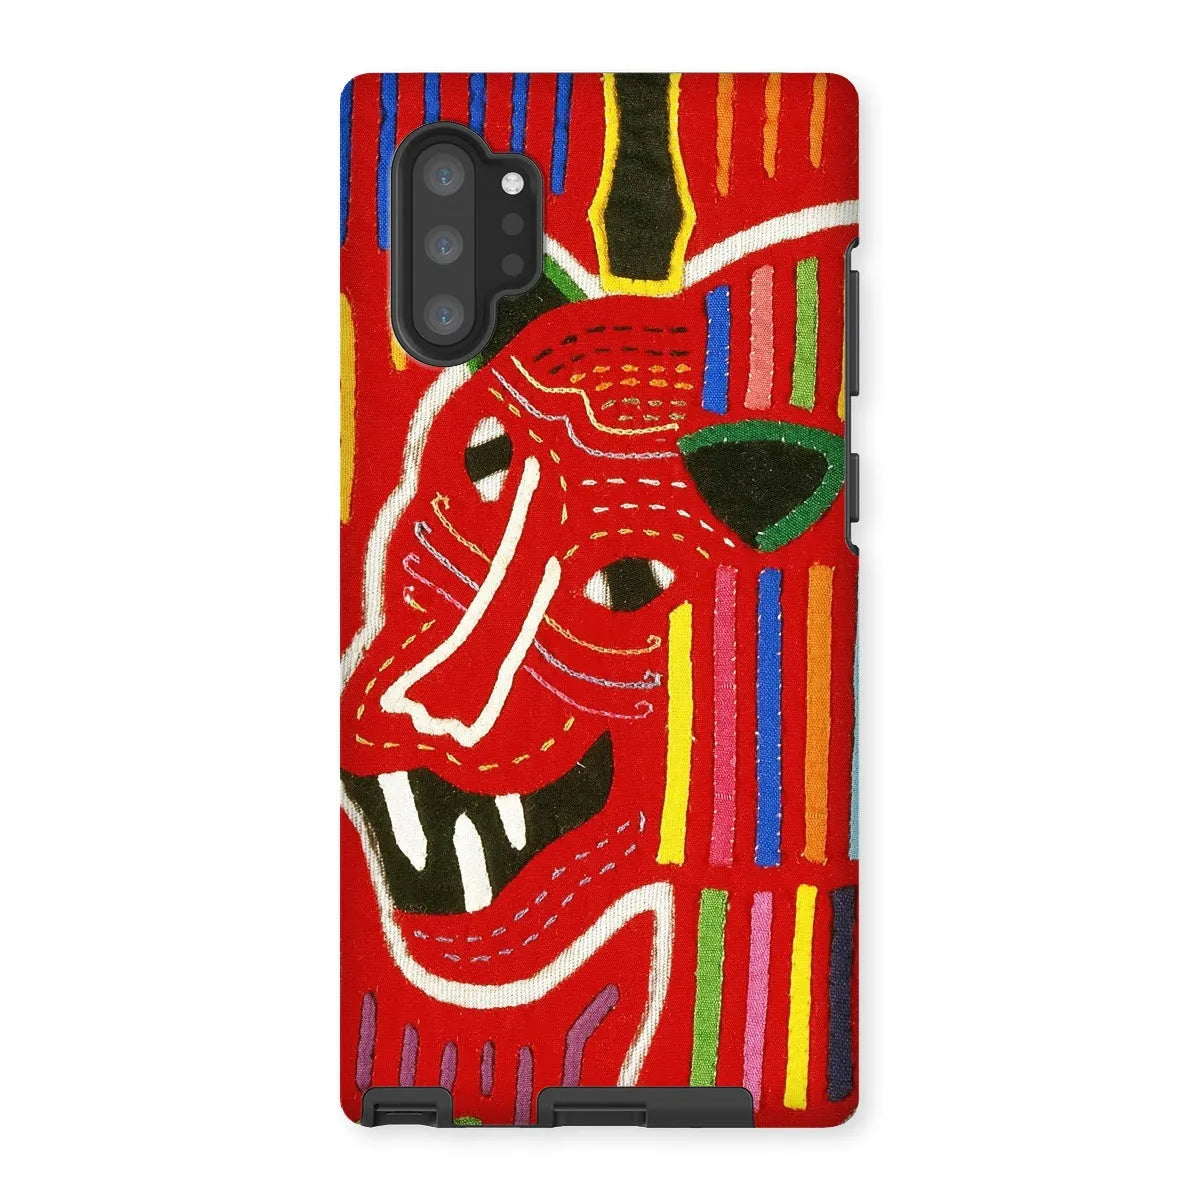 Roaring Tiger - Mola Needlework Art Phone Case - Samsung Galaxy Note 10p / Matte - Mobile Phone Cases - Aesthetic Art